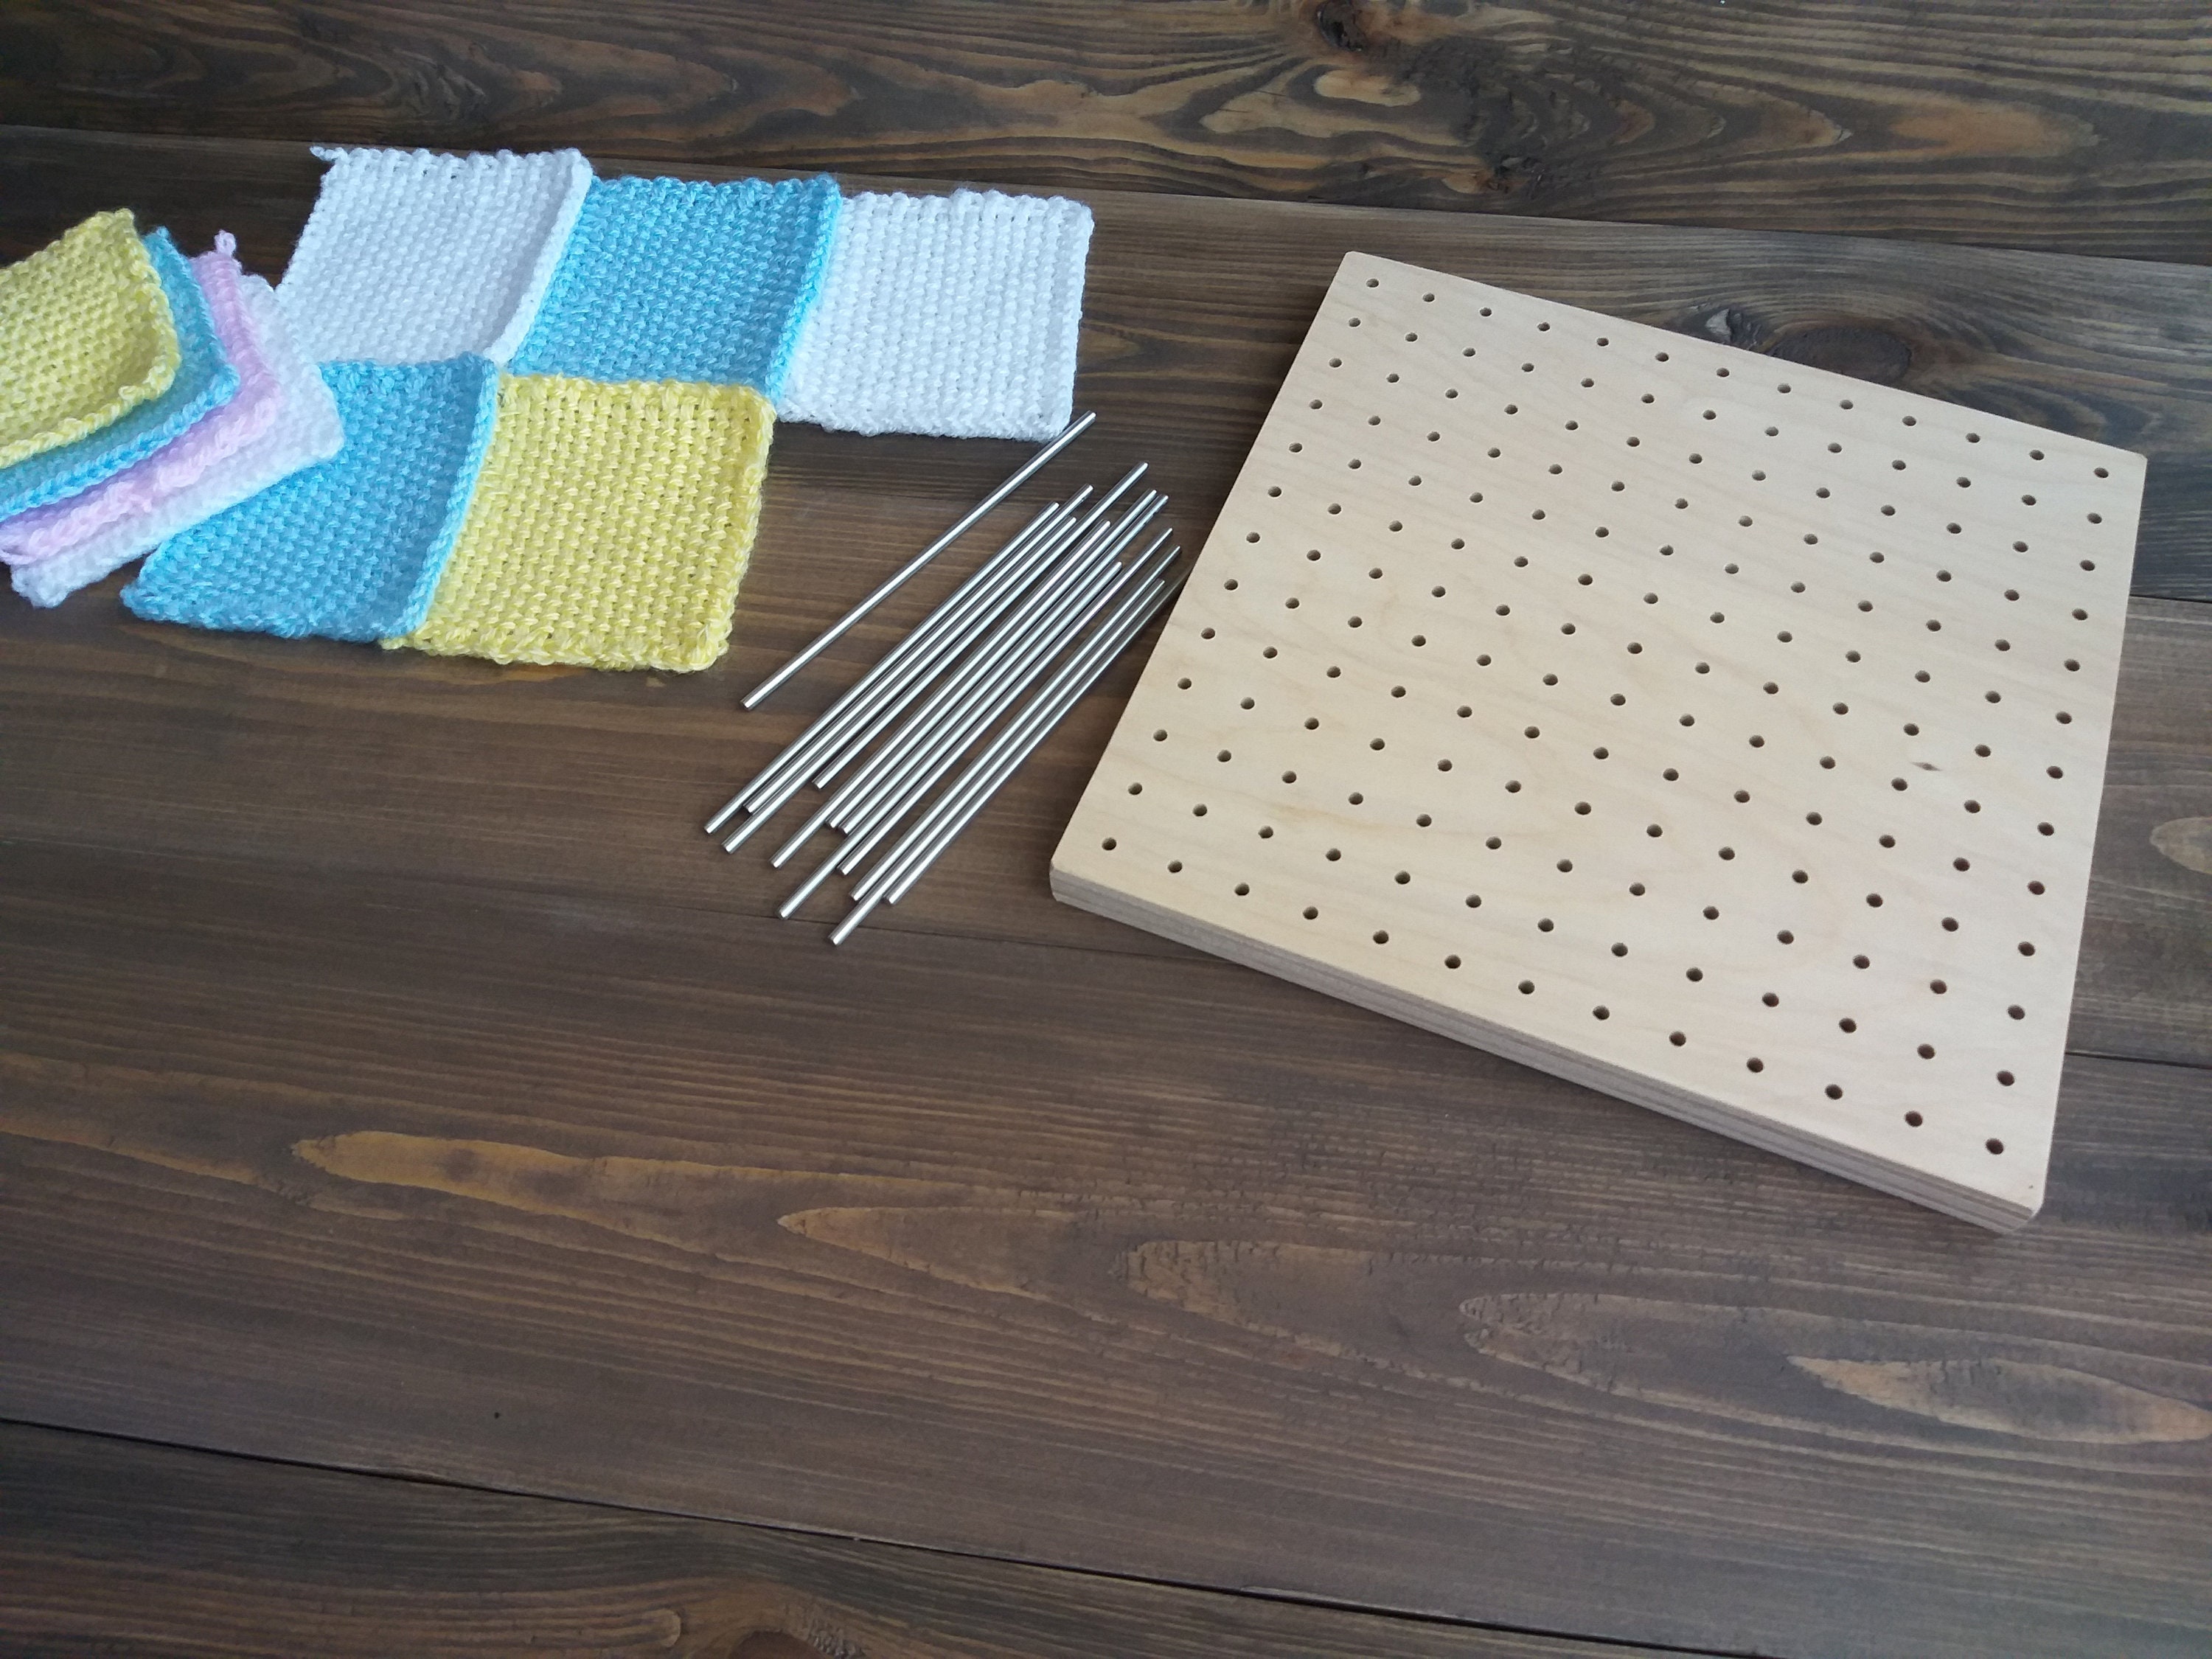 Hexagon Crochet Blocking Board and Stainless Steel Pins Knitting Block  Handmade